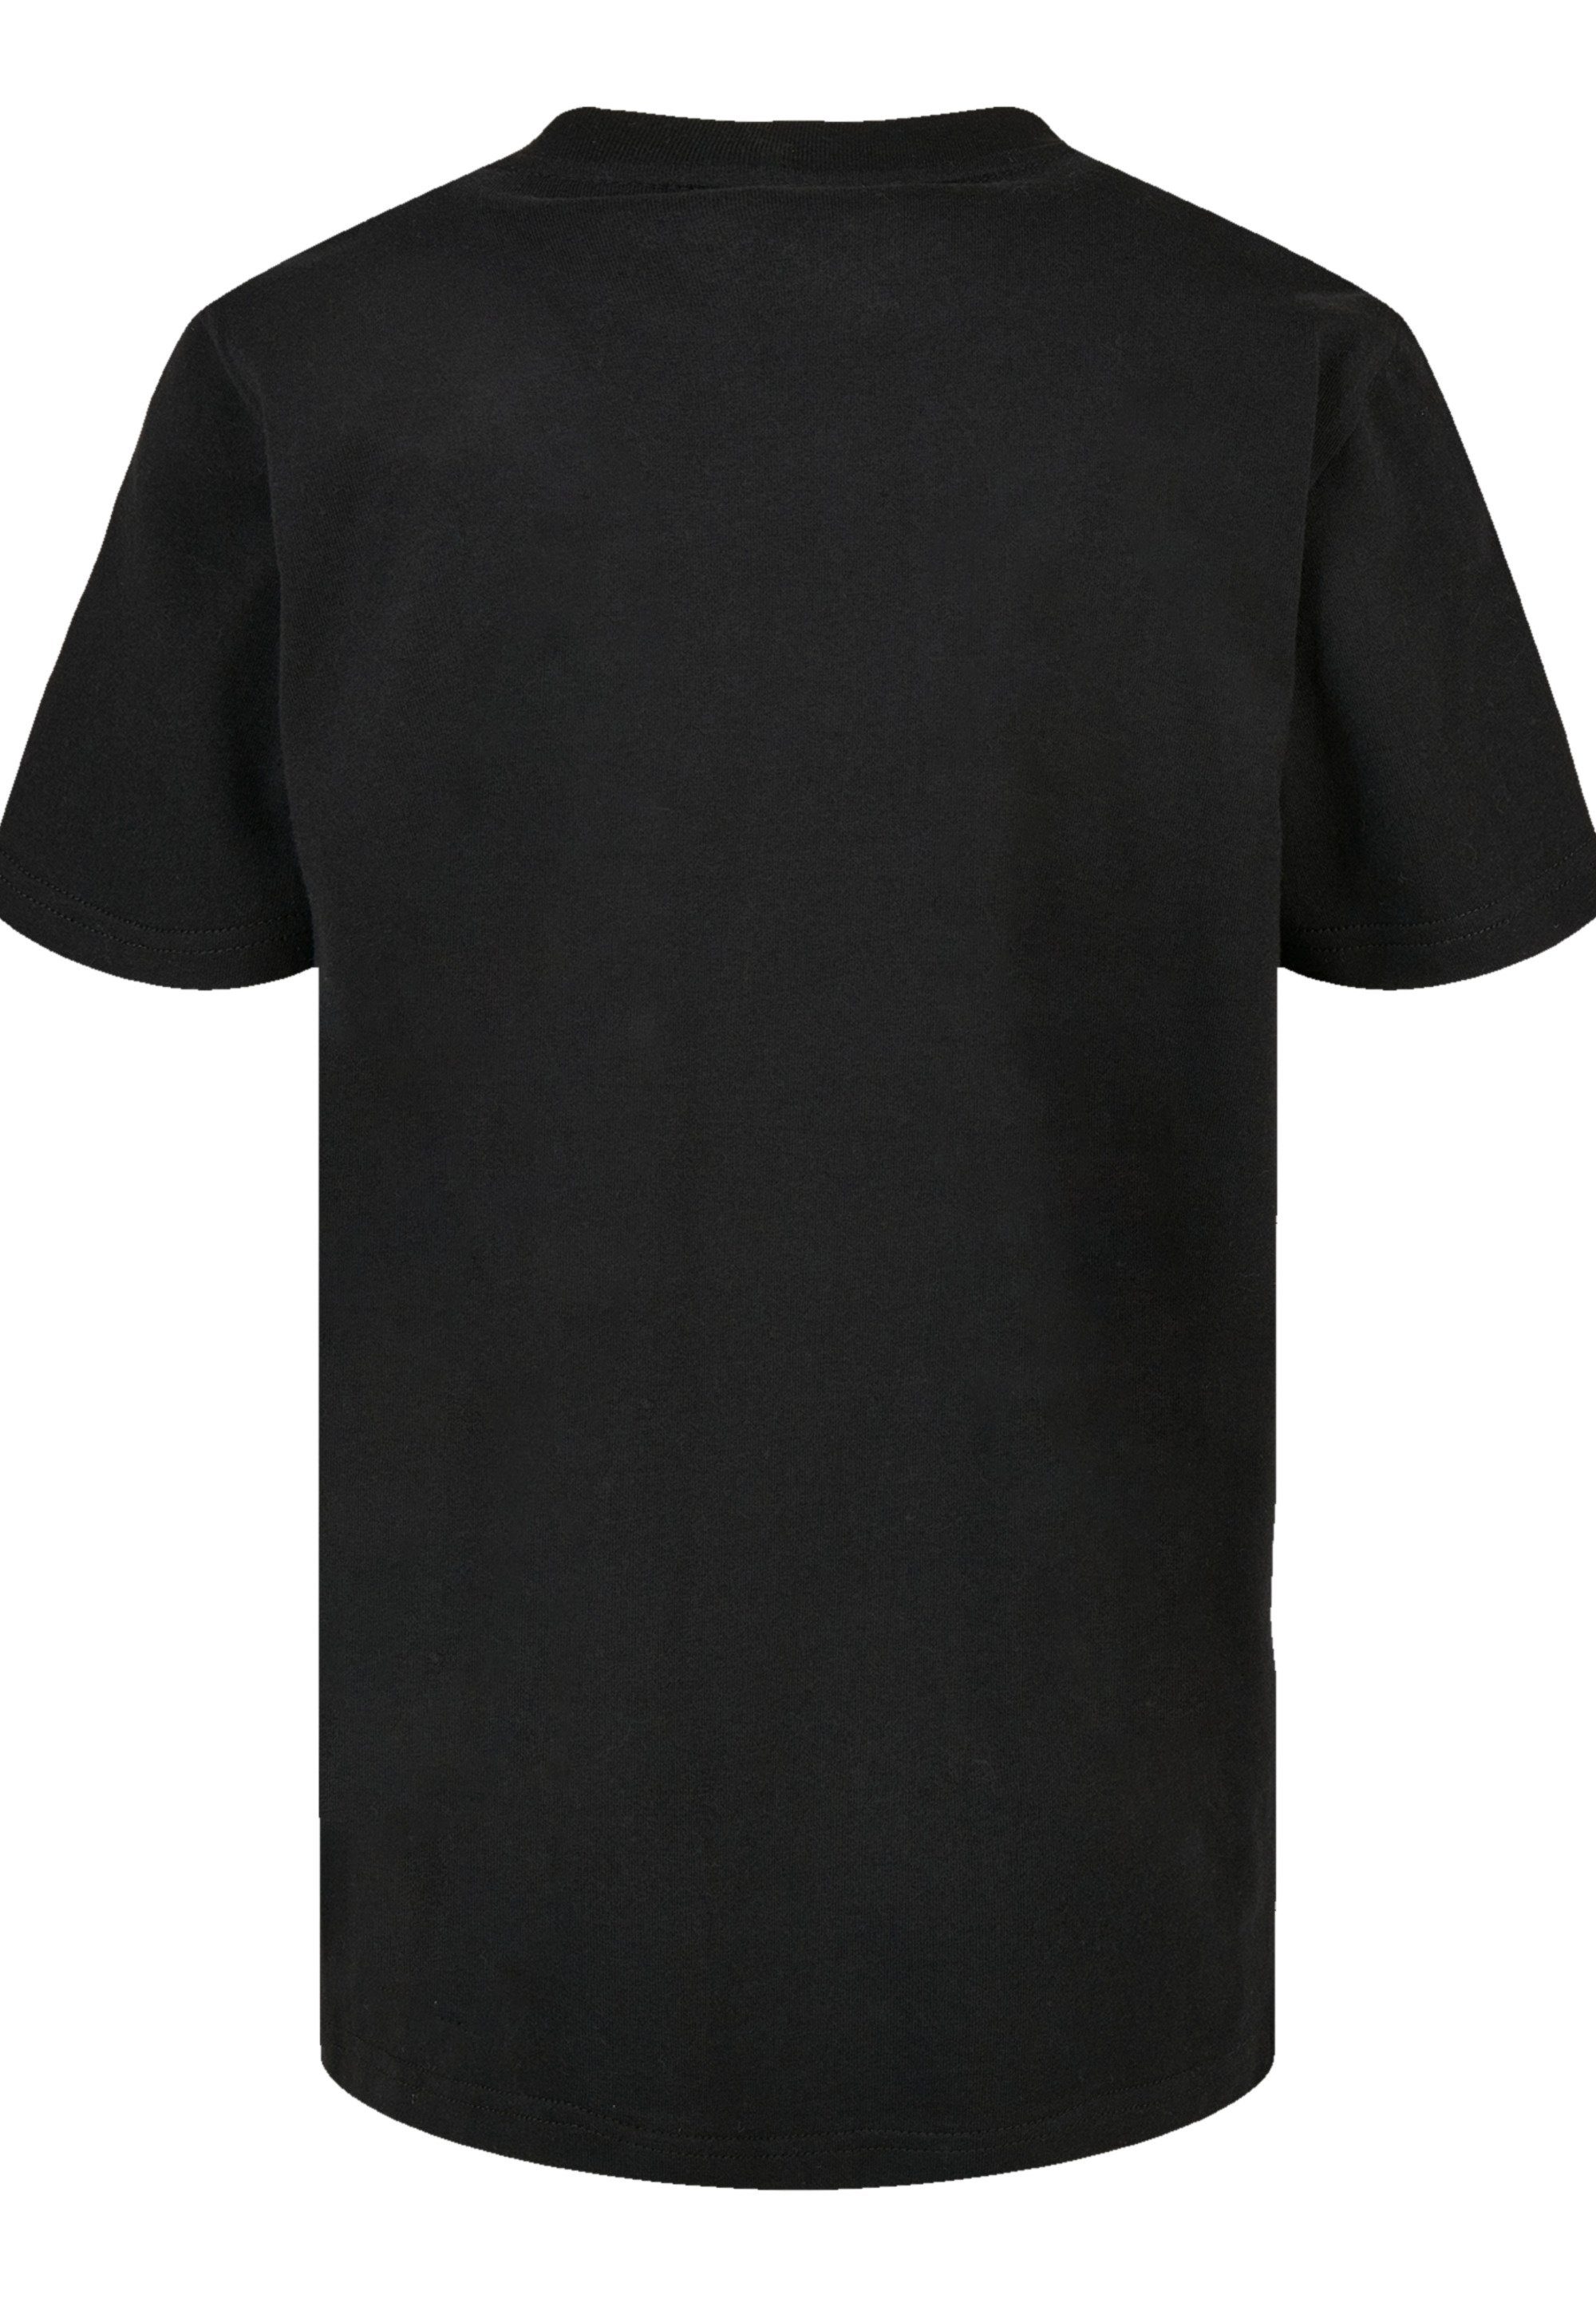 Print Black T-Shirt Sabbath F4NT4STIC Logo Black schwarz Wavy